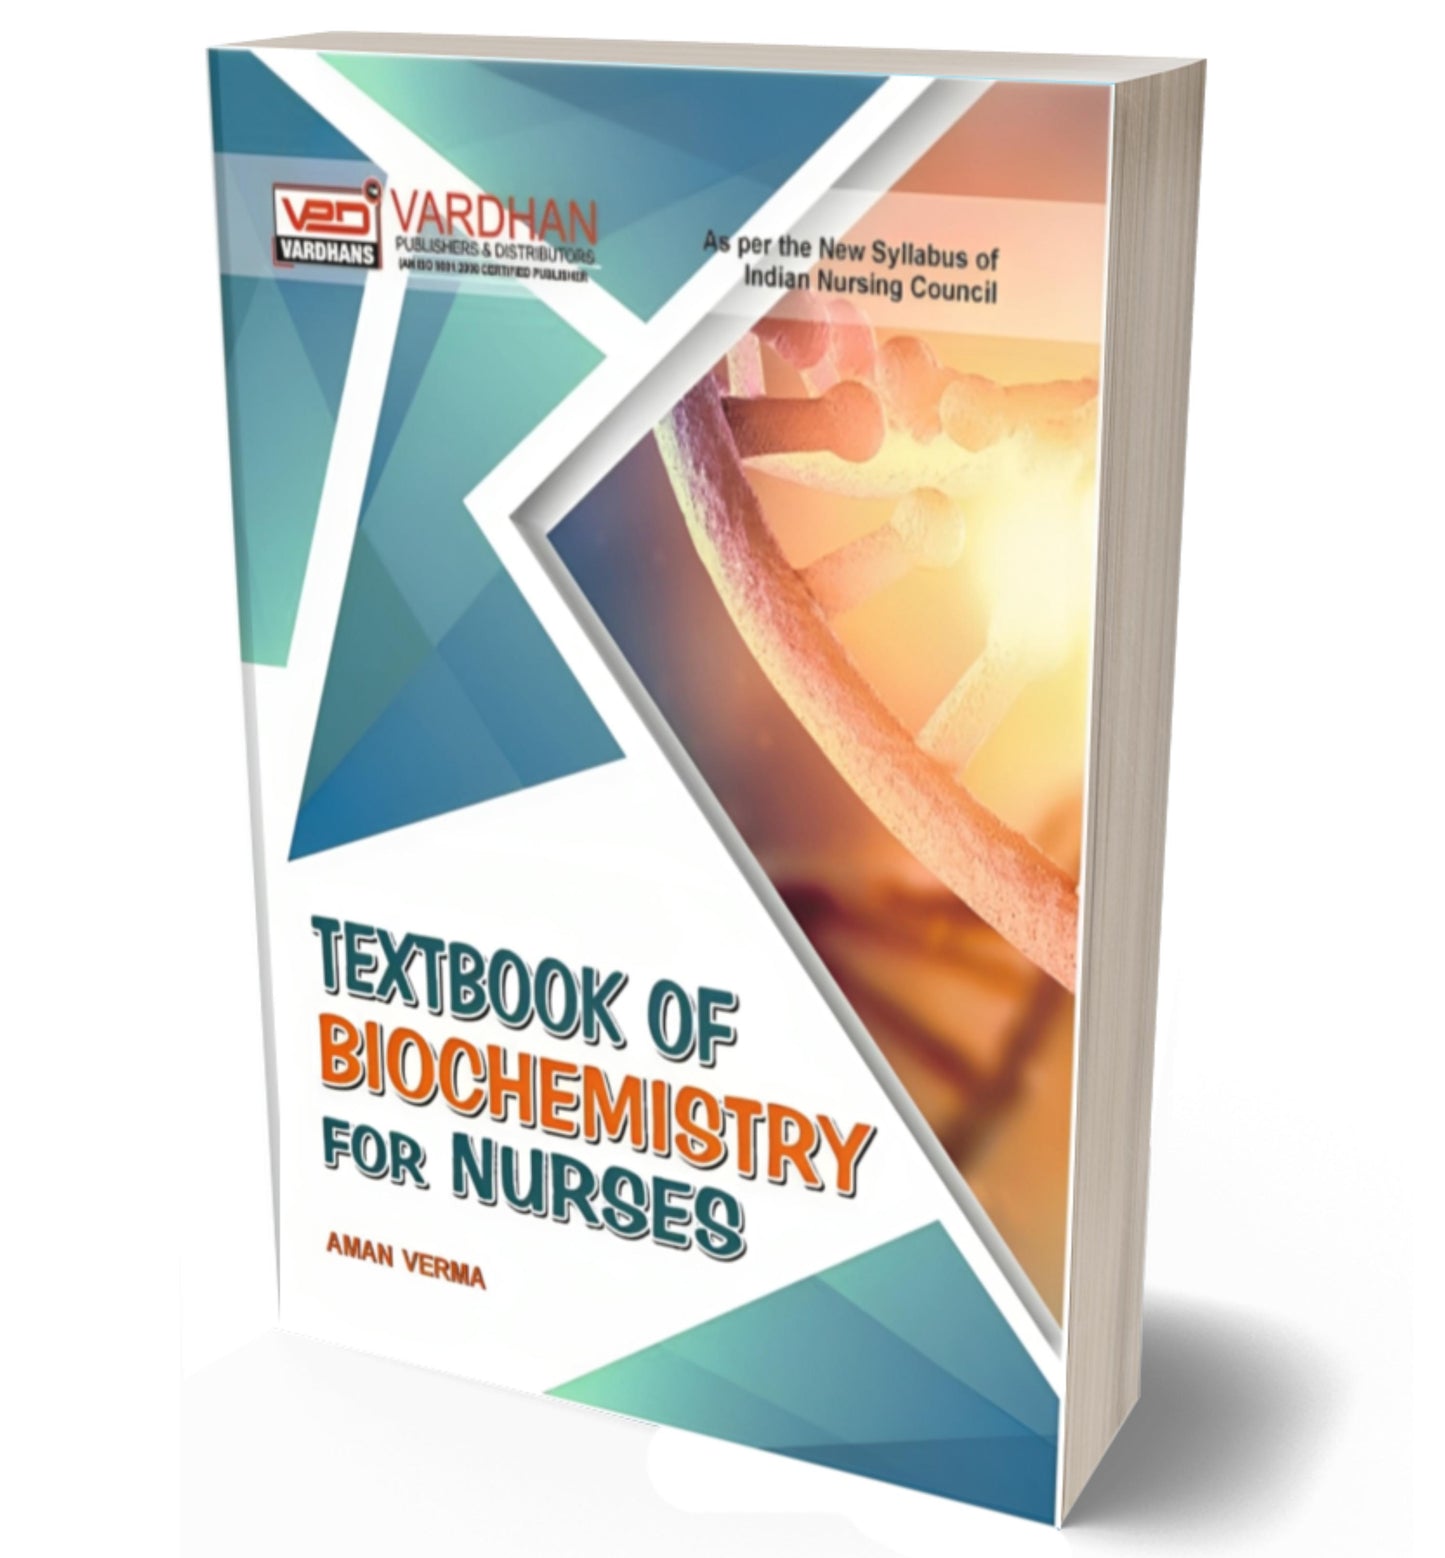 Textbook of Biochemistry for Nurses